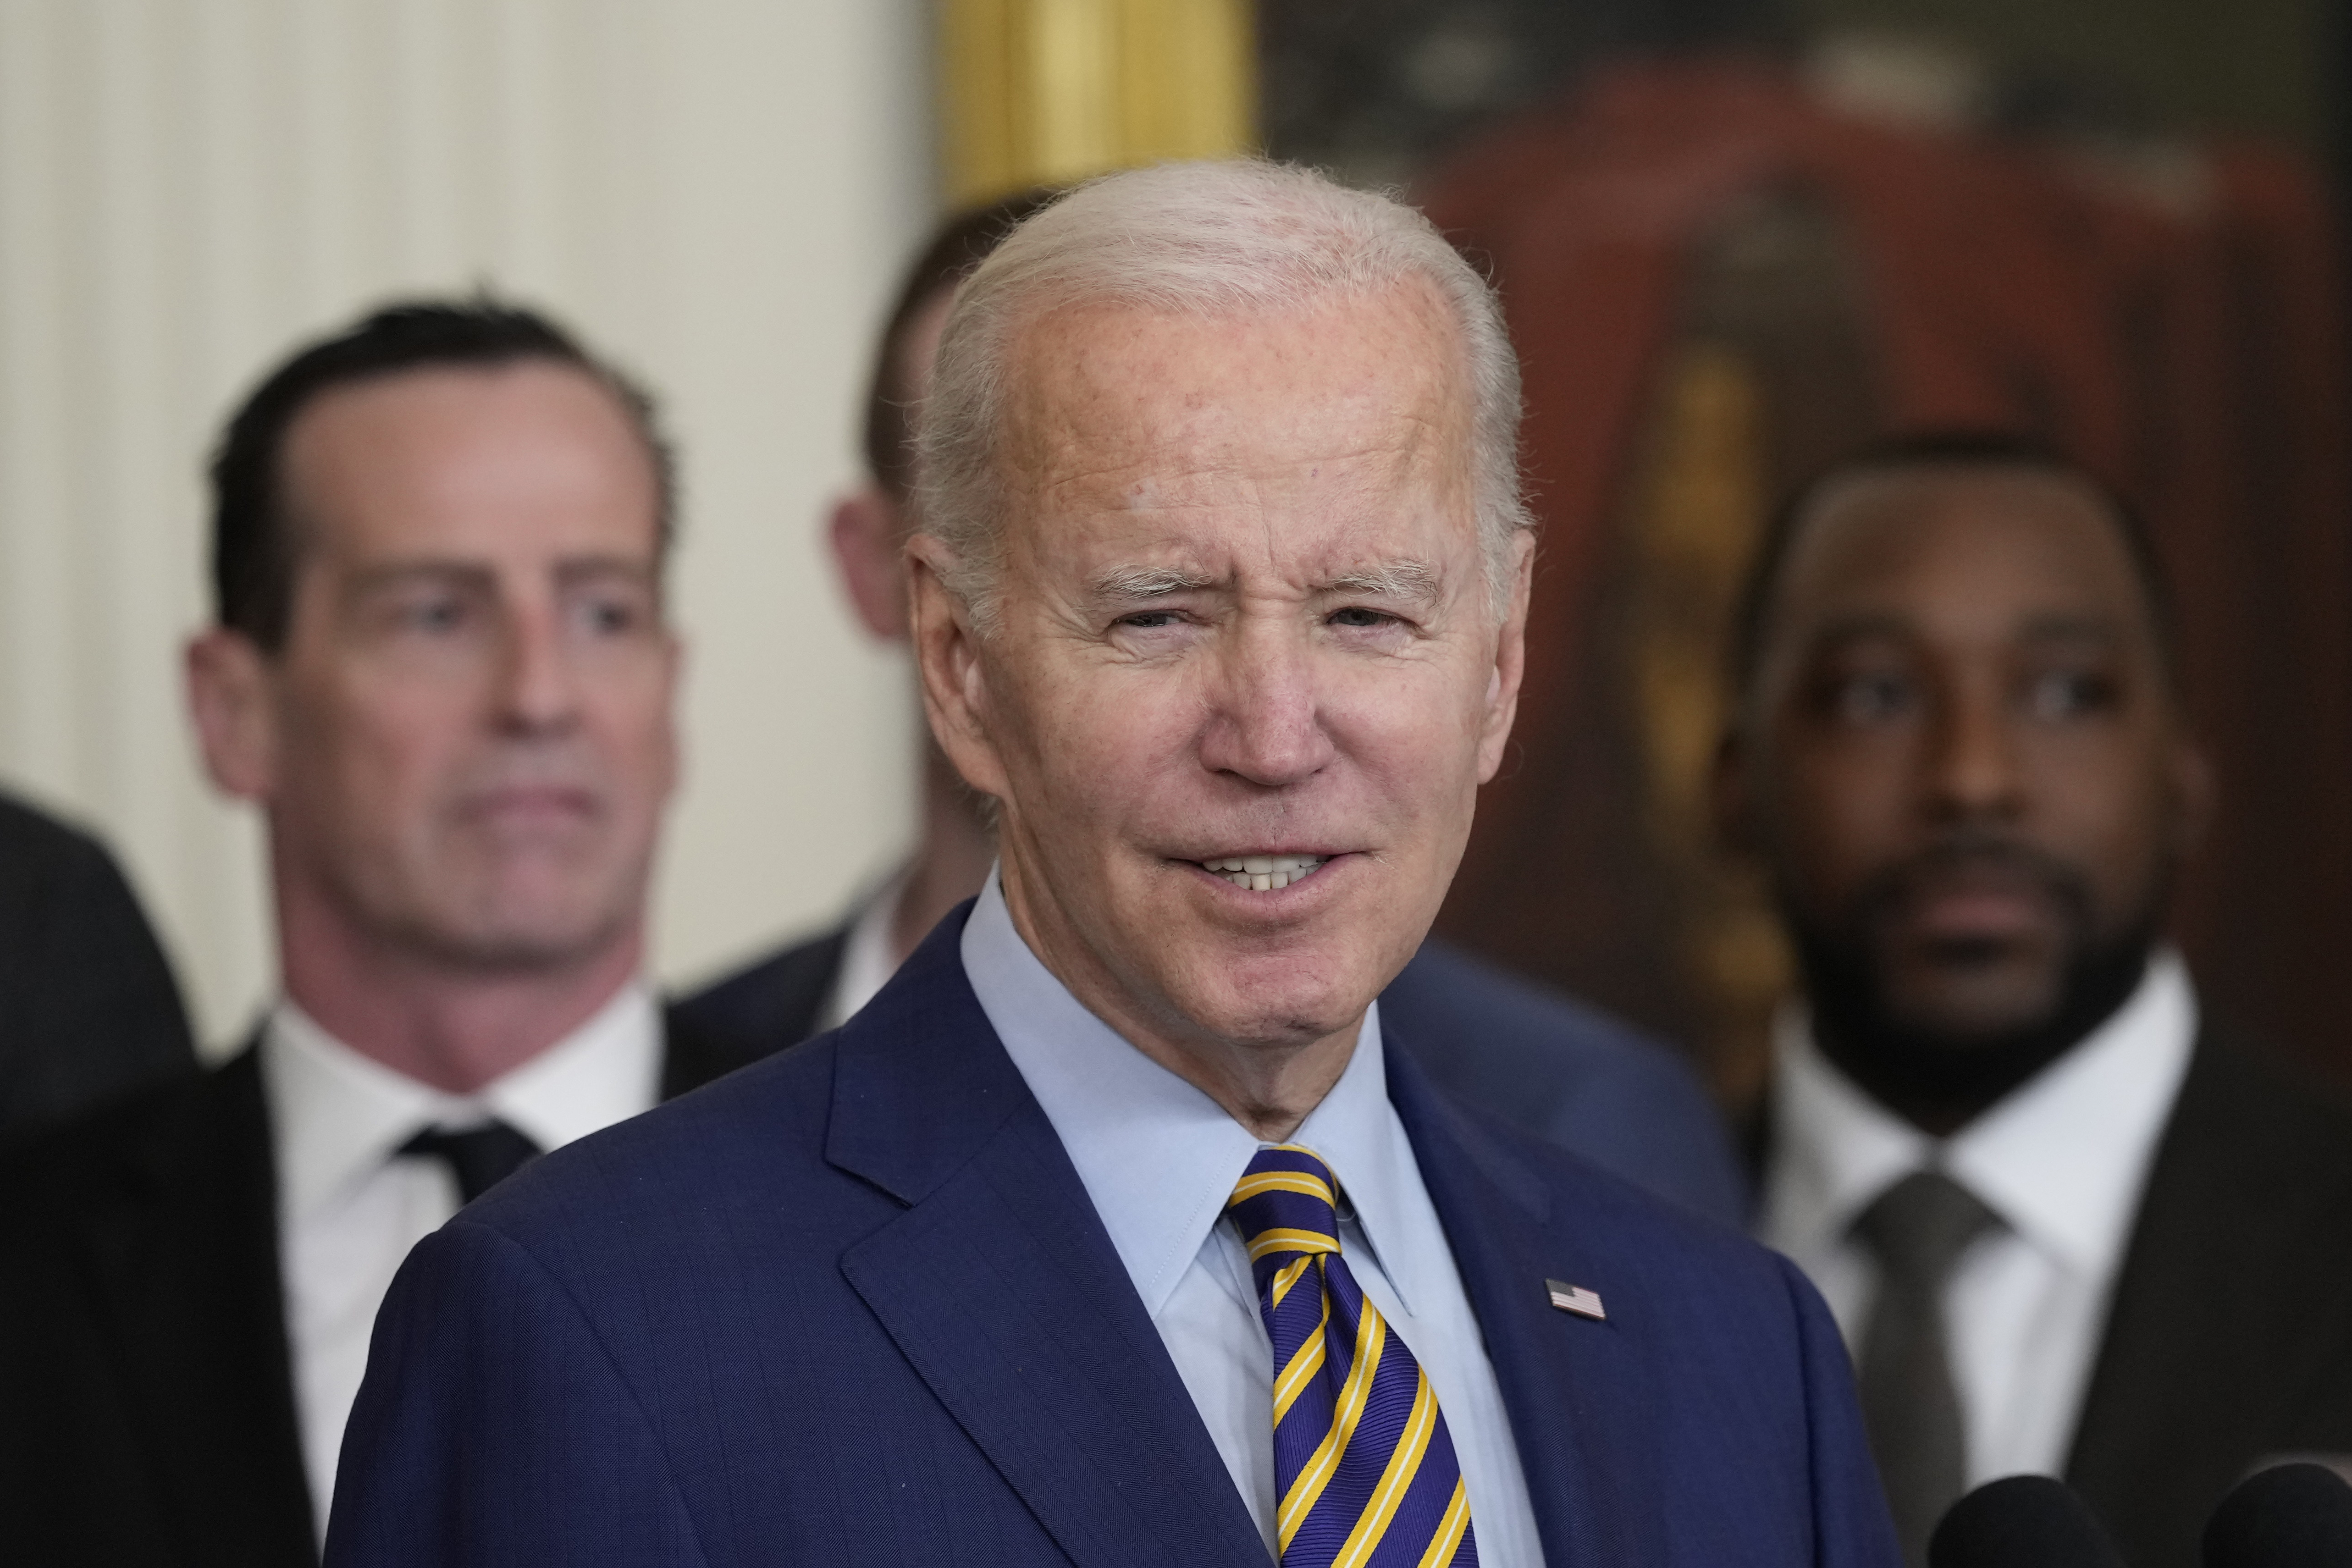 Biden welcomes NBA Champion Warriors, pledges support for California